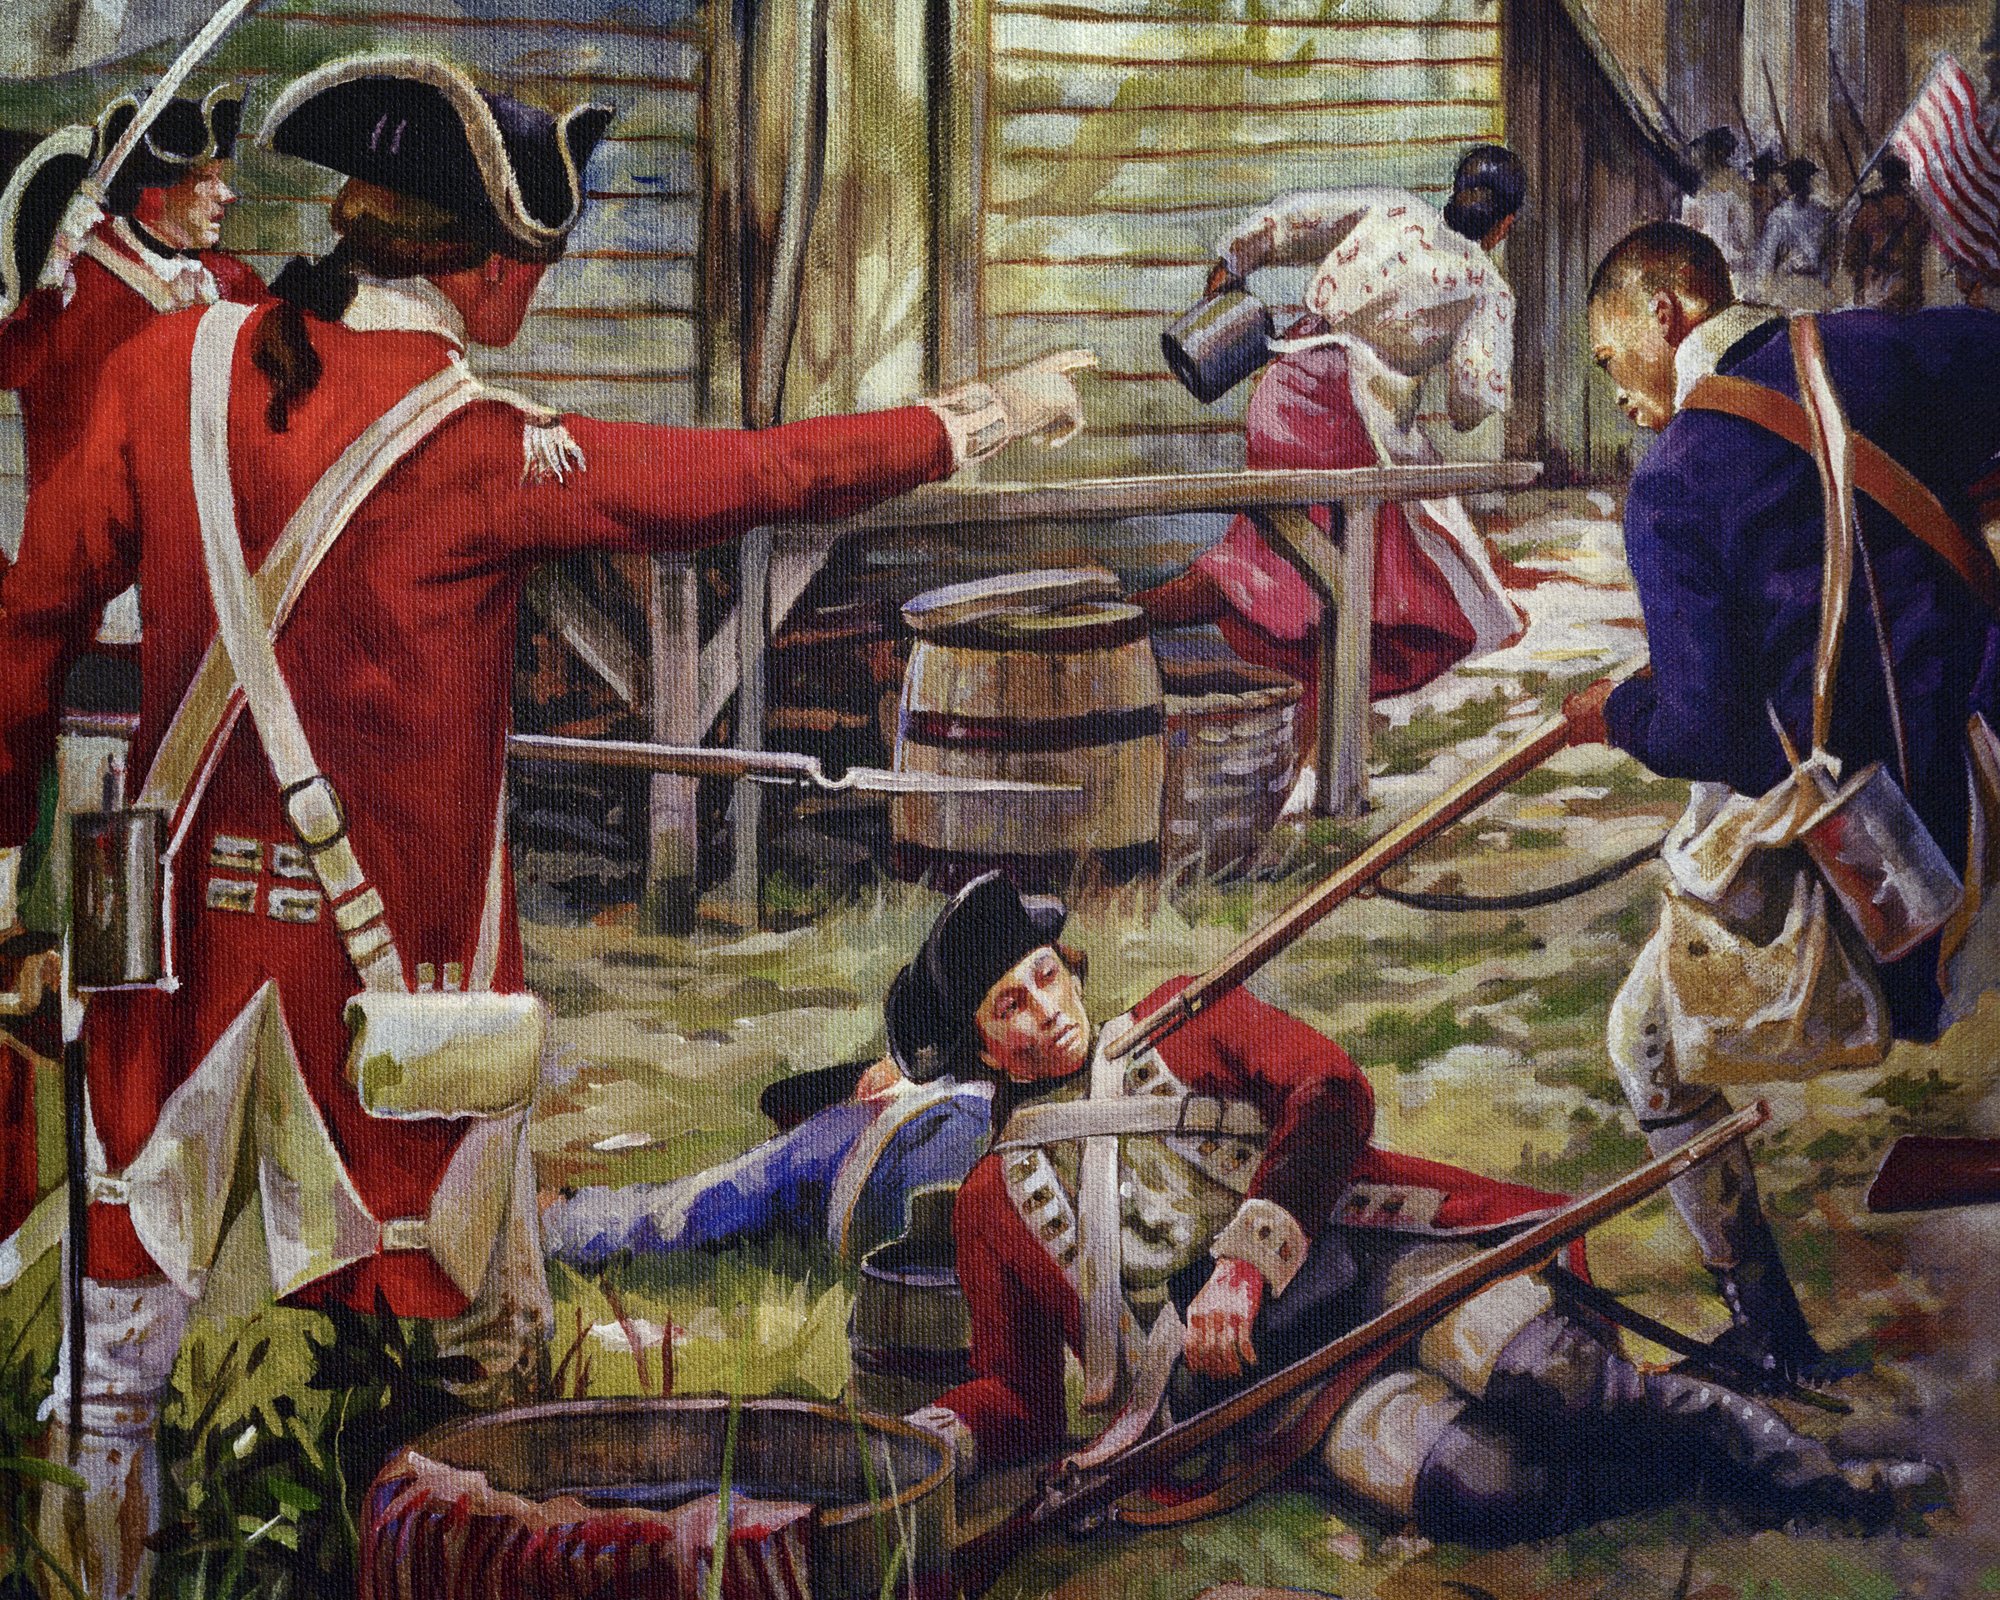 Revolutionary War Painting, High Street Inn